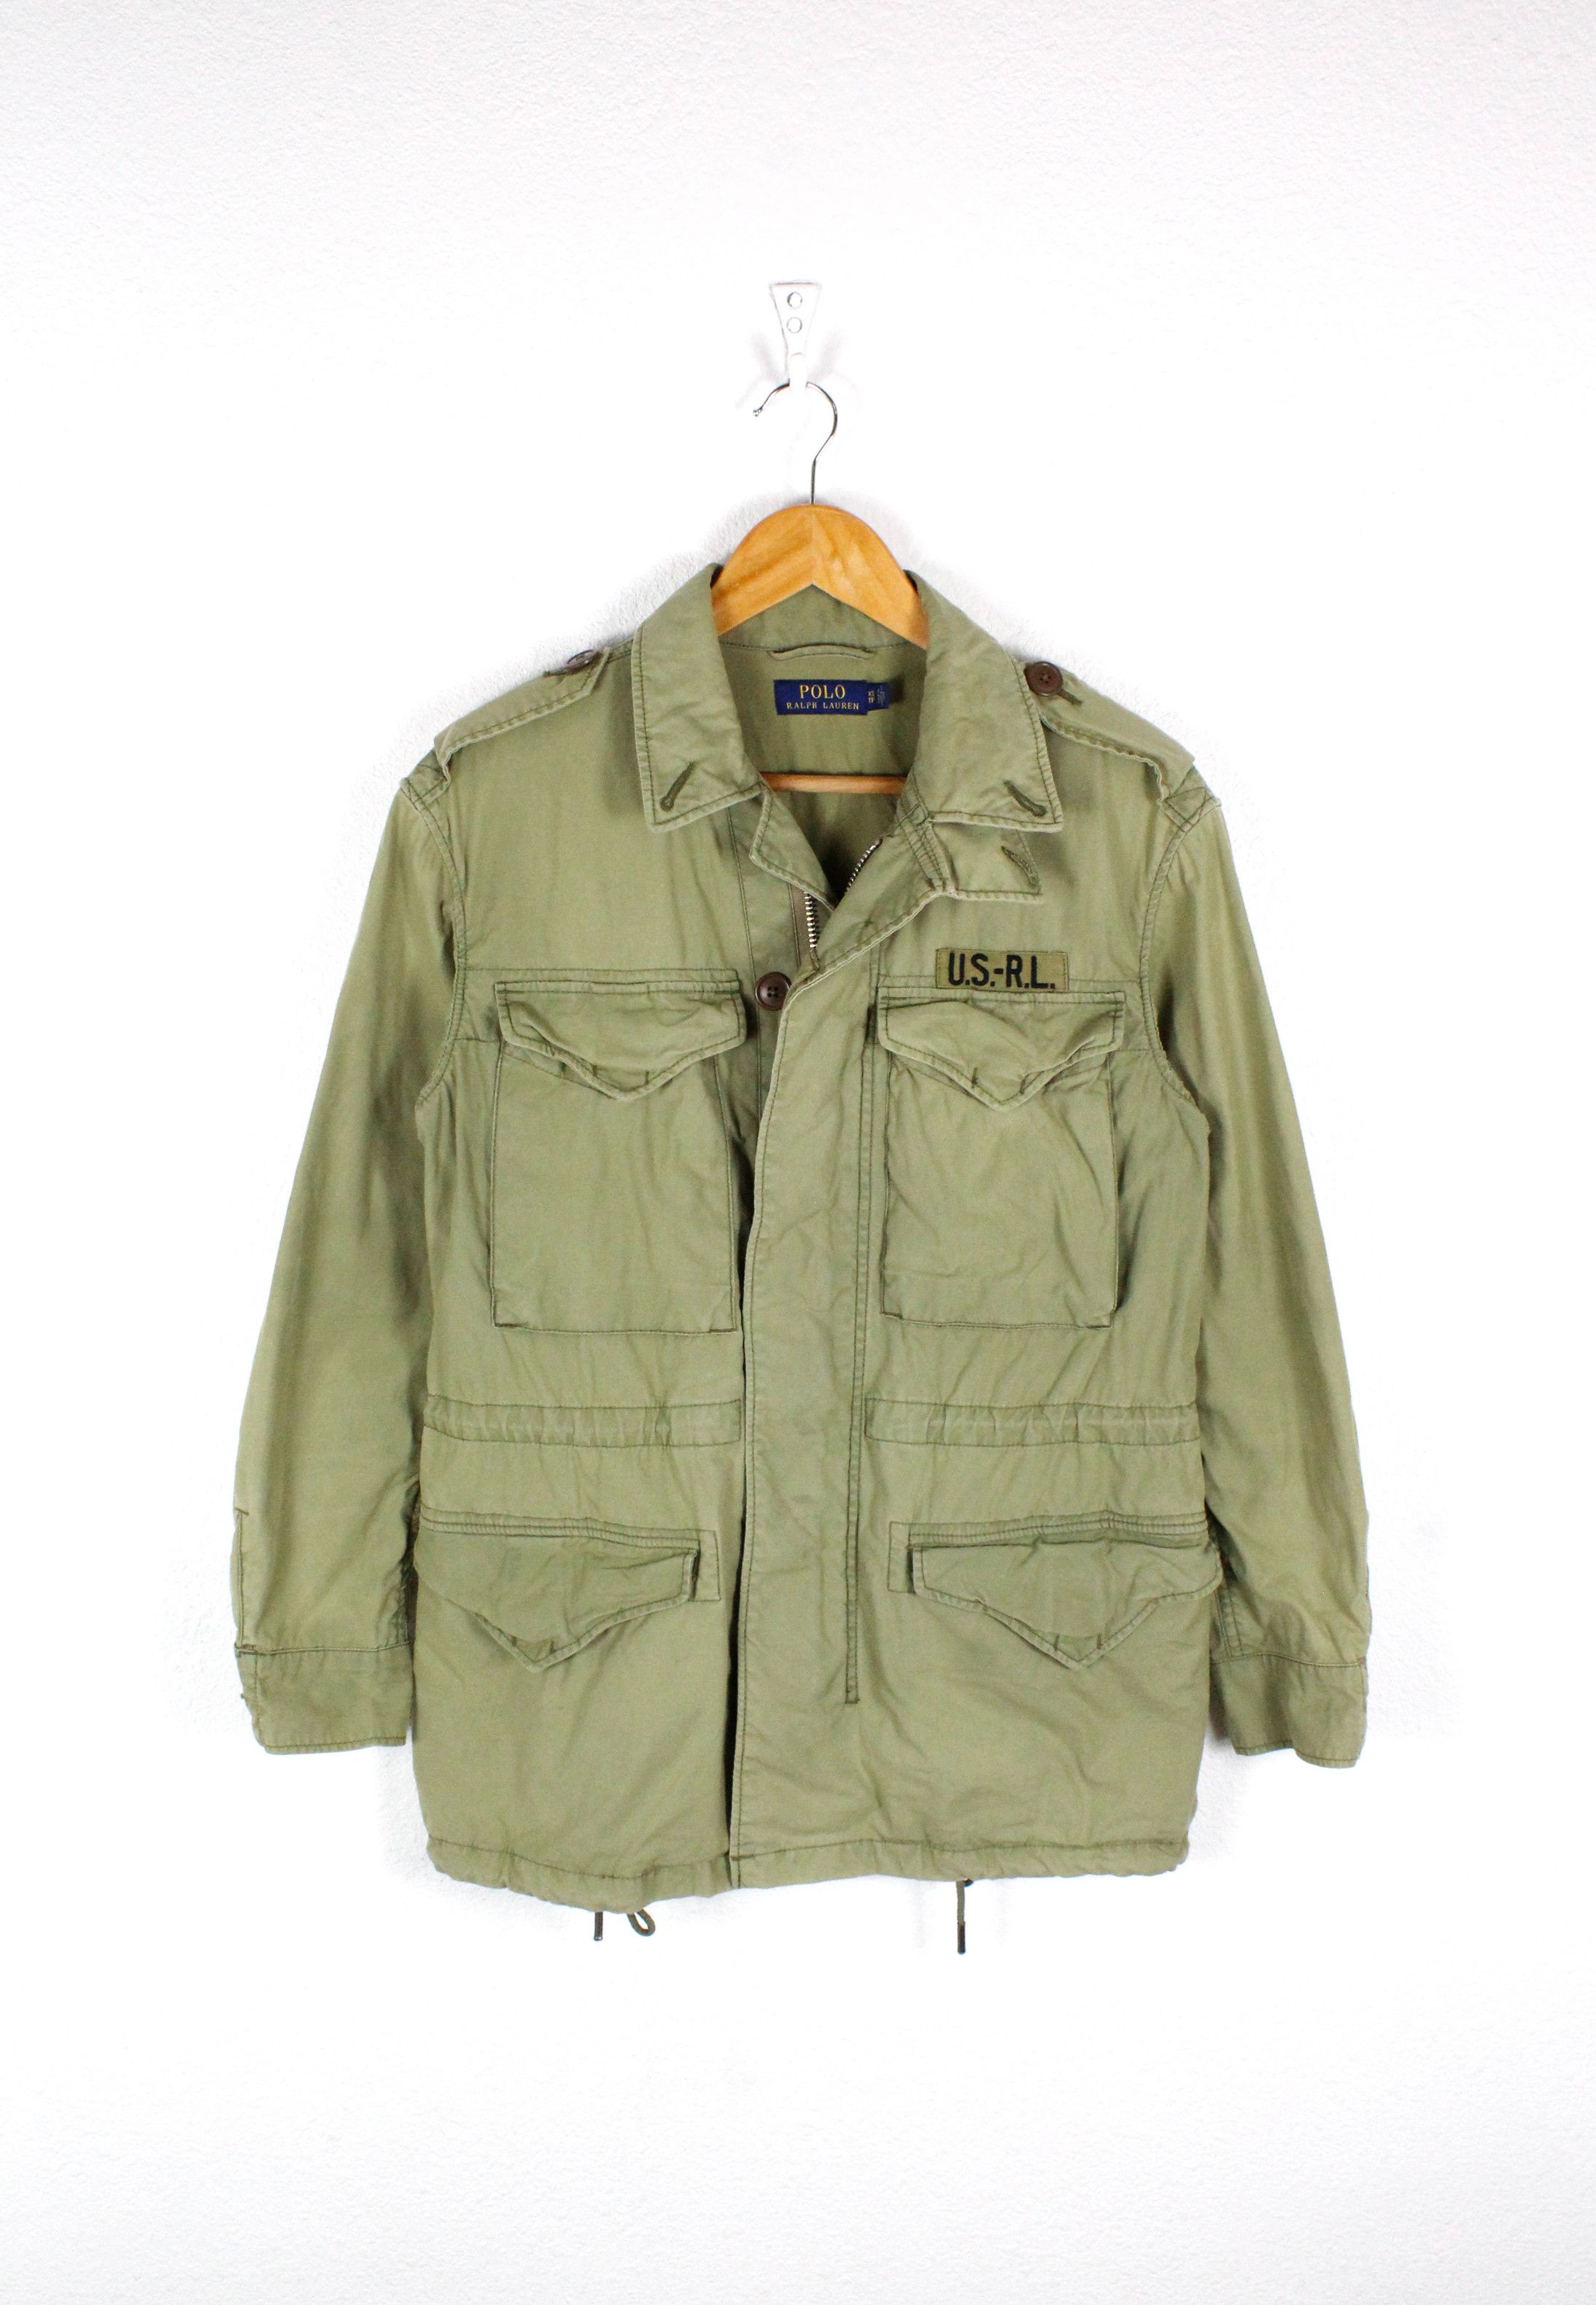 Polo Ralph Lauren Polo Ralph Lauren Army Green US RL M-65 Military Jacket |  Grailed